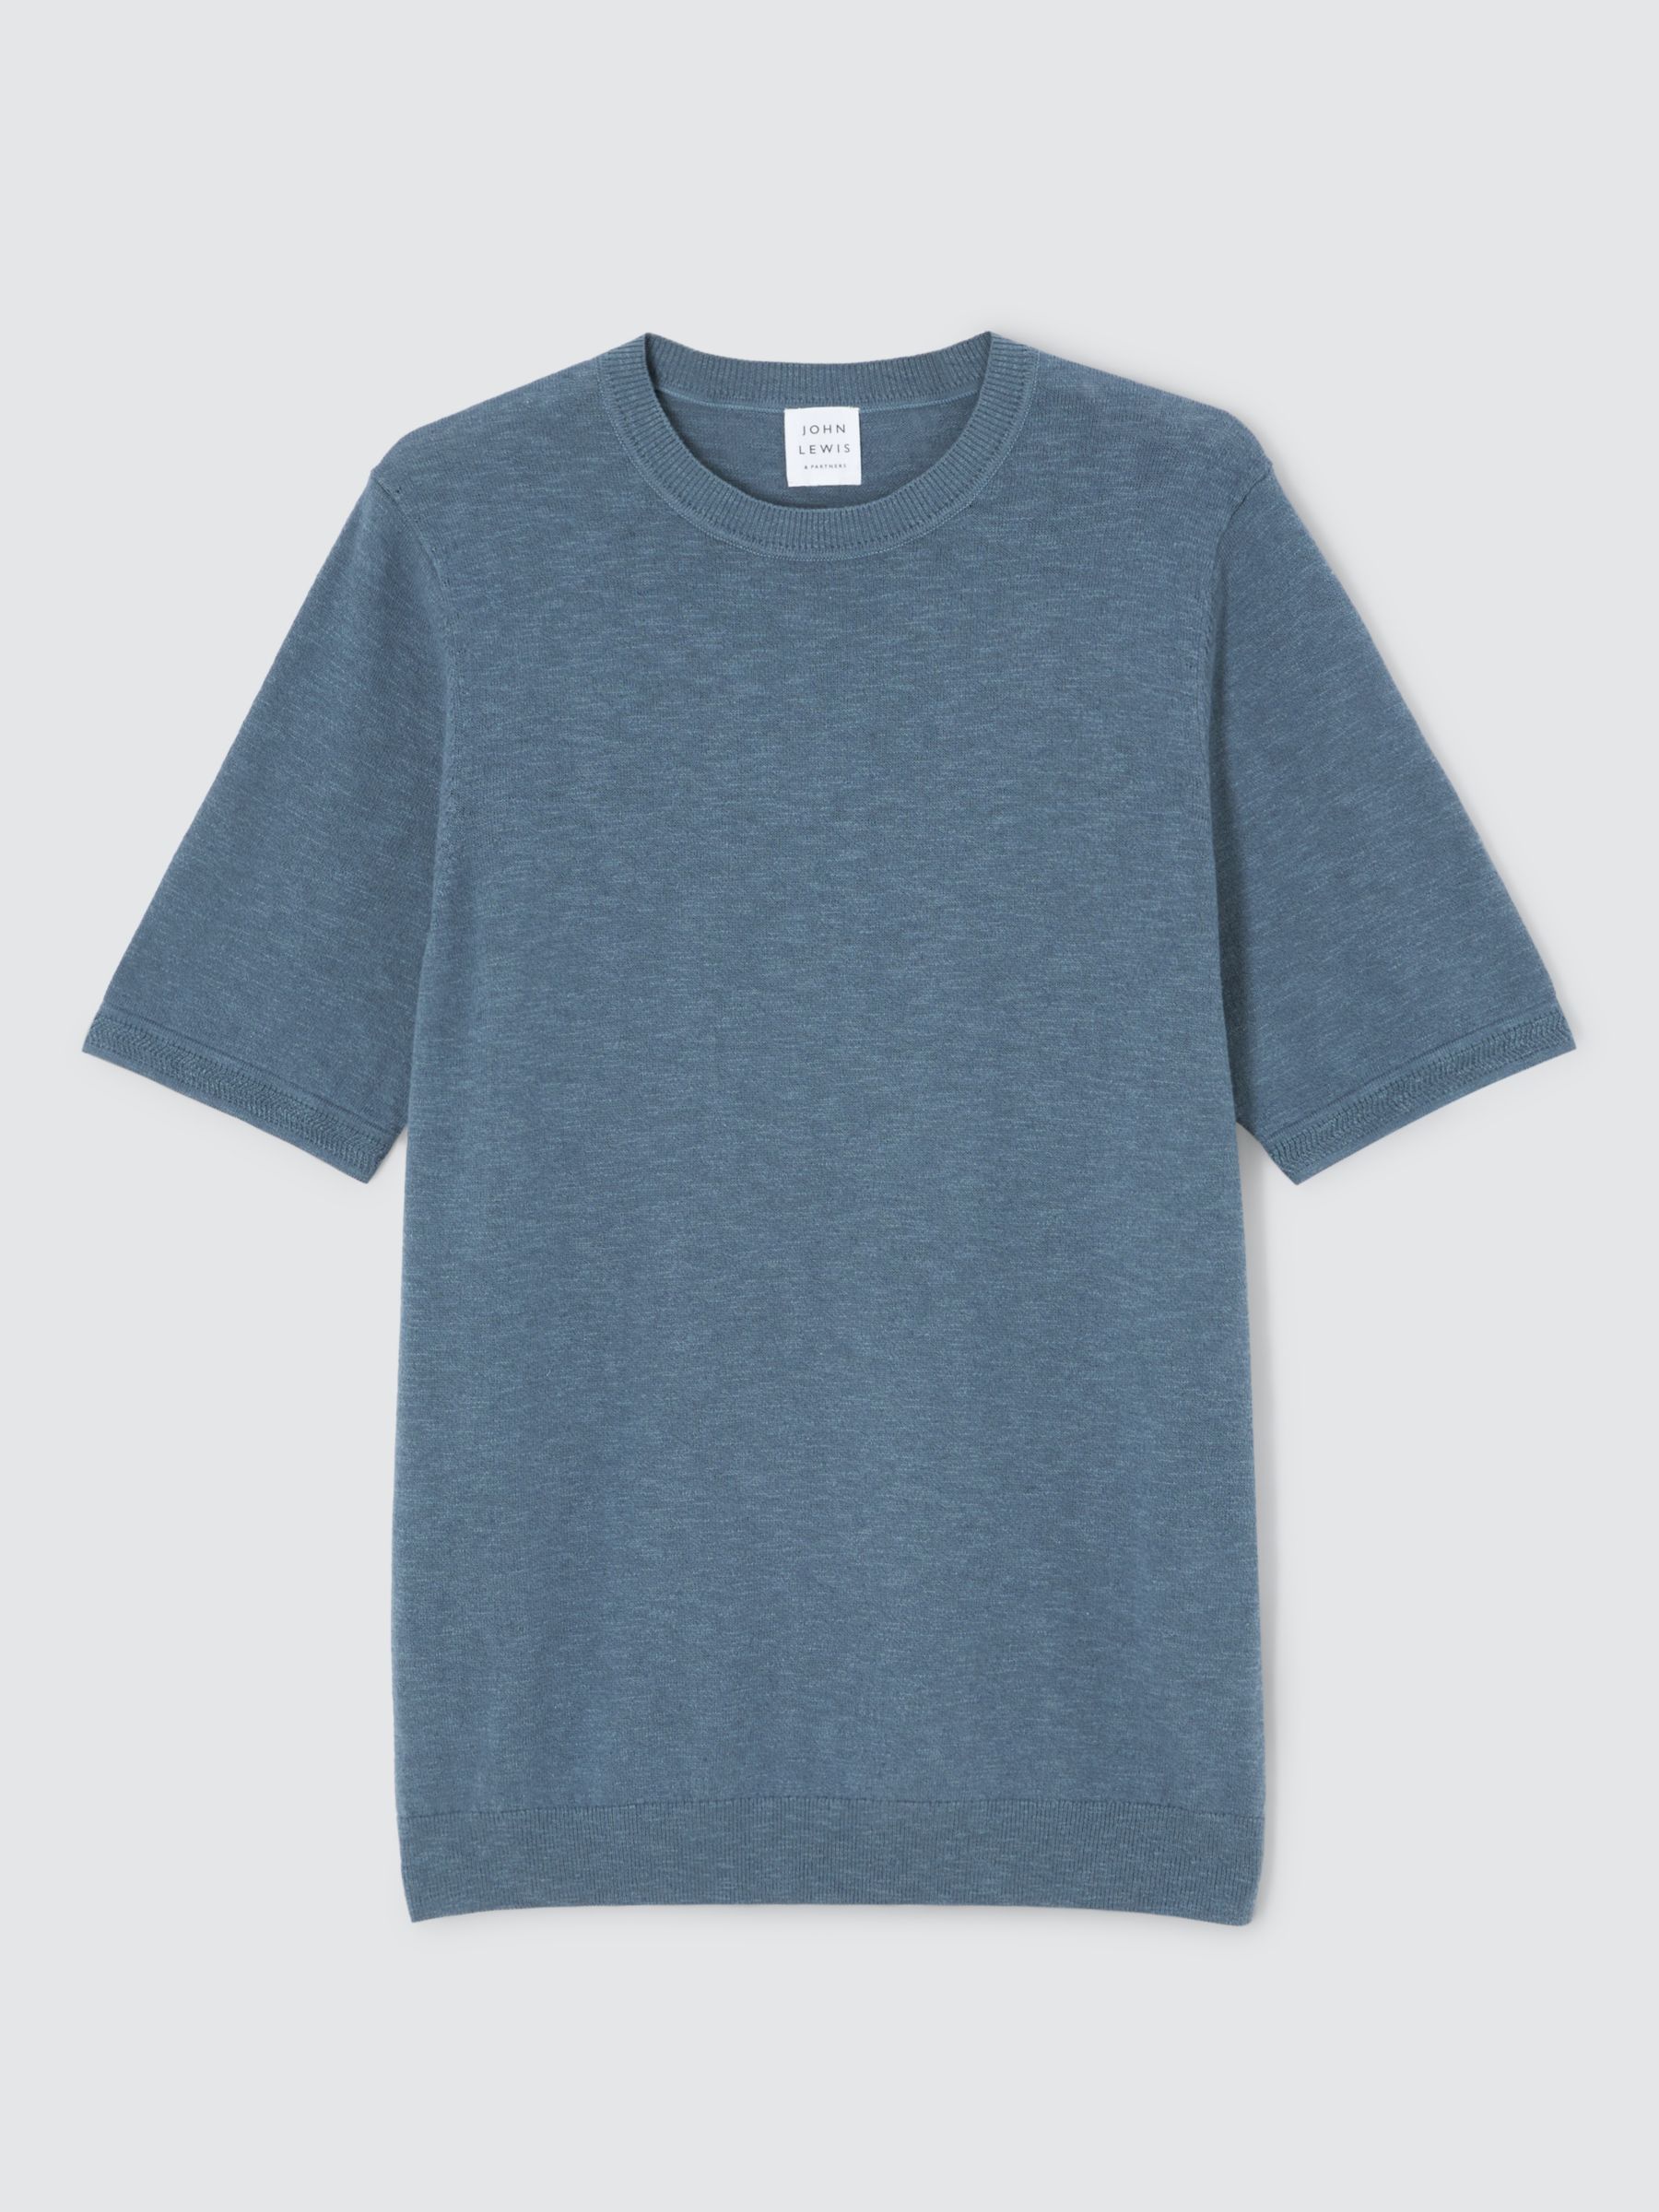 John Lewis Cotton Linen Knit T-Shirt, China Blue, L